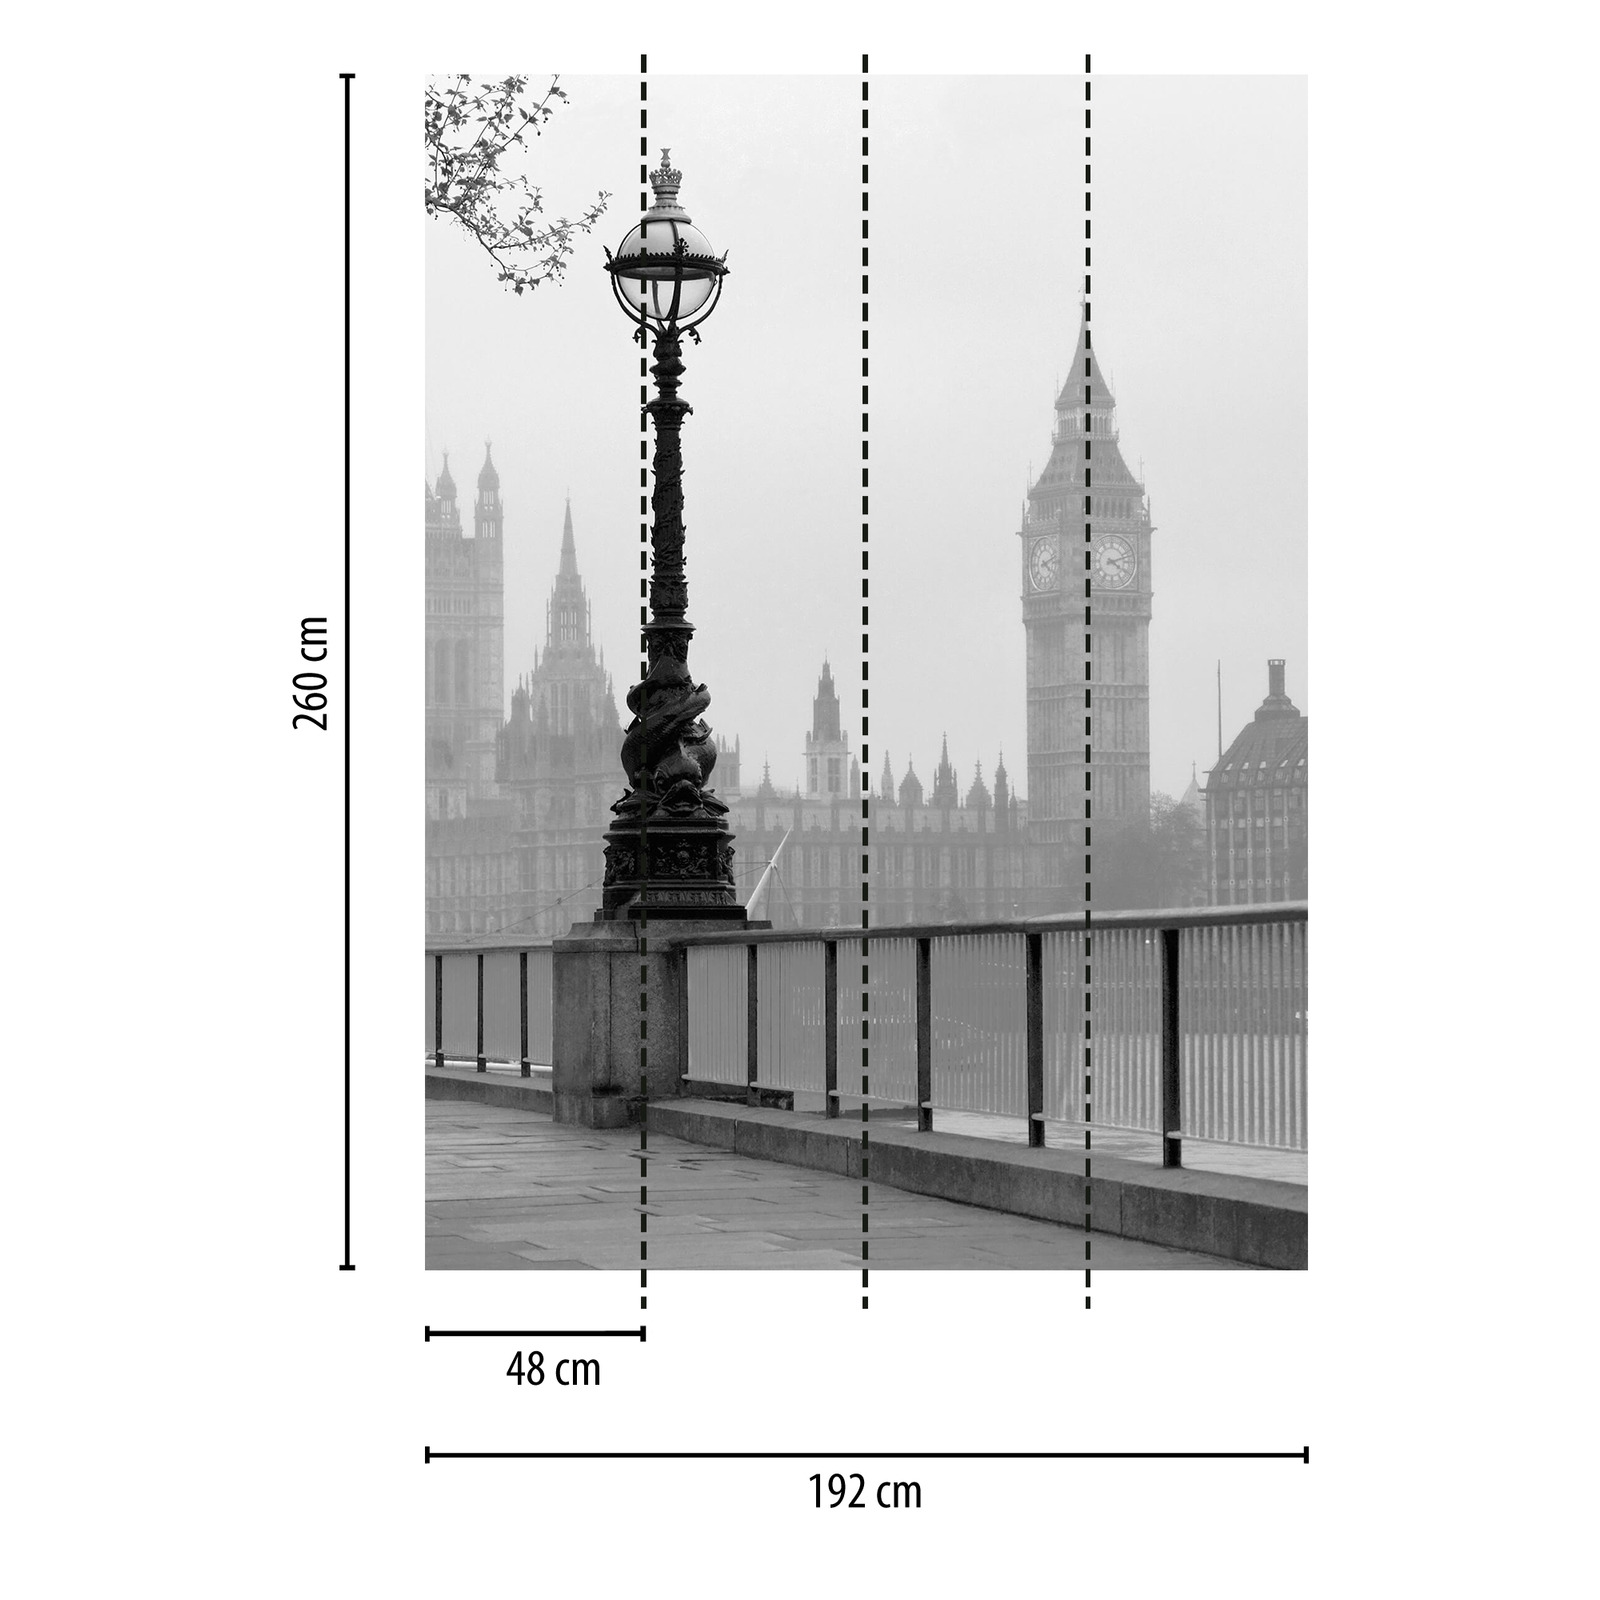             Fototapete London Stadt im Nebel – Schwarz, Weiß, Grau
        